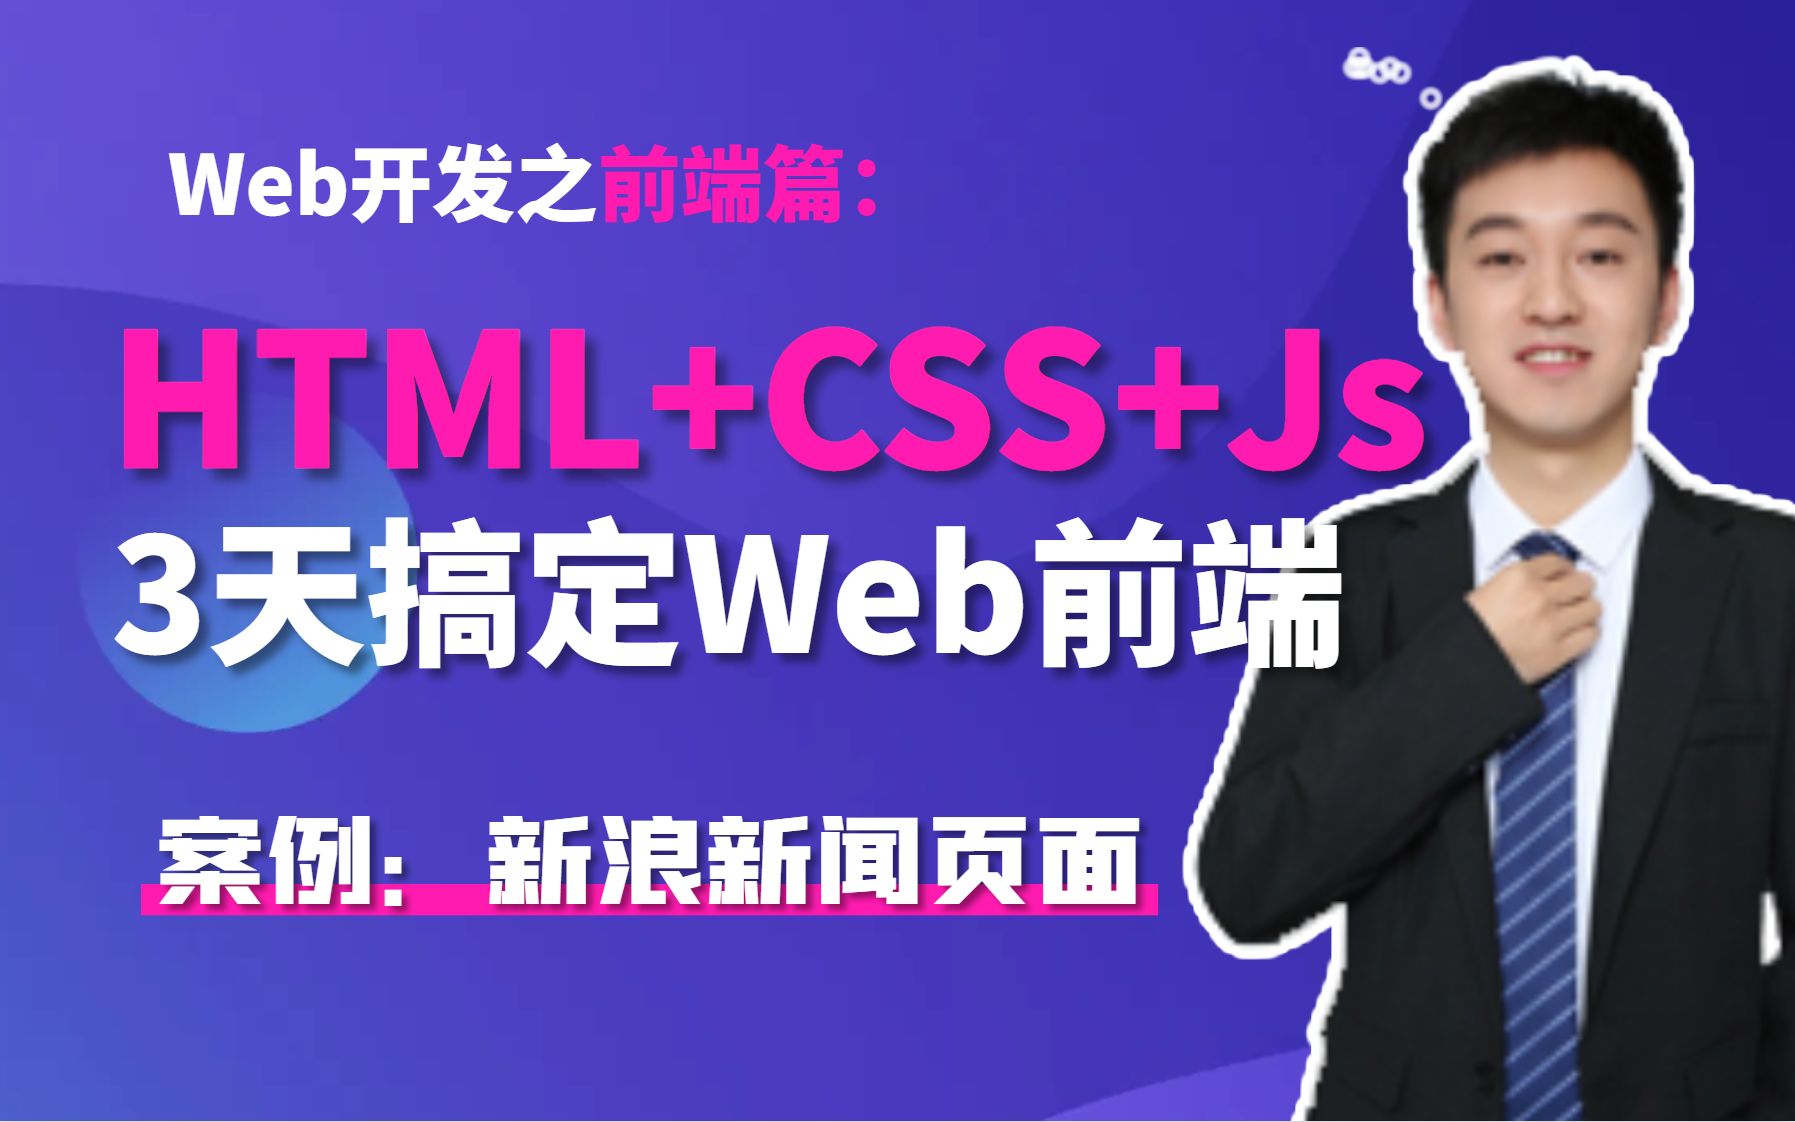 HTML+CSS+Js+Vue+Element…带你3天搞定web前端！JavaWeb企业开发全流程之Web前端开发！-黑马程序员武汉中心